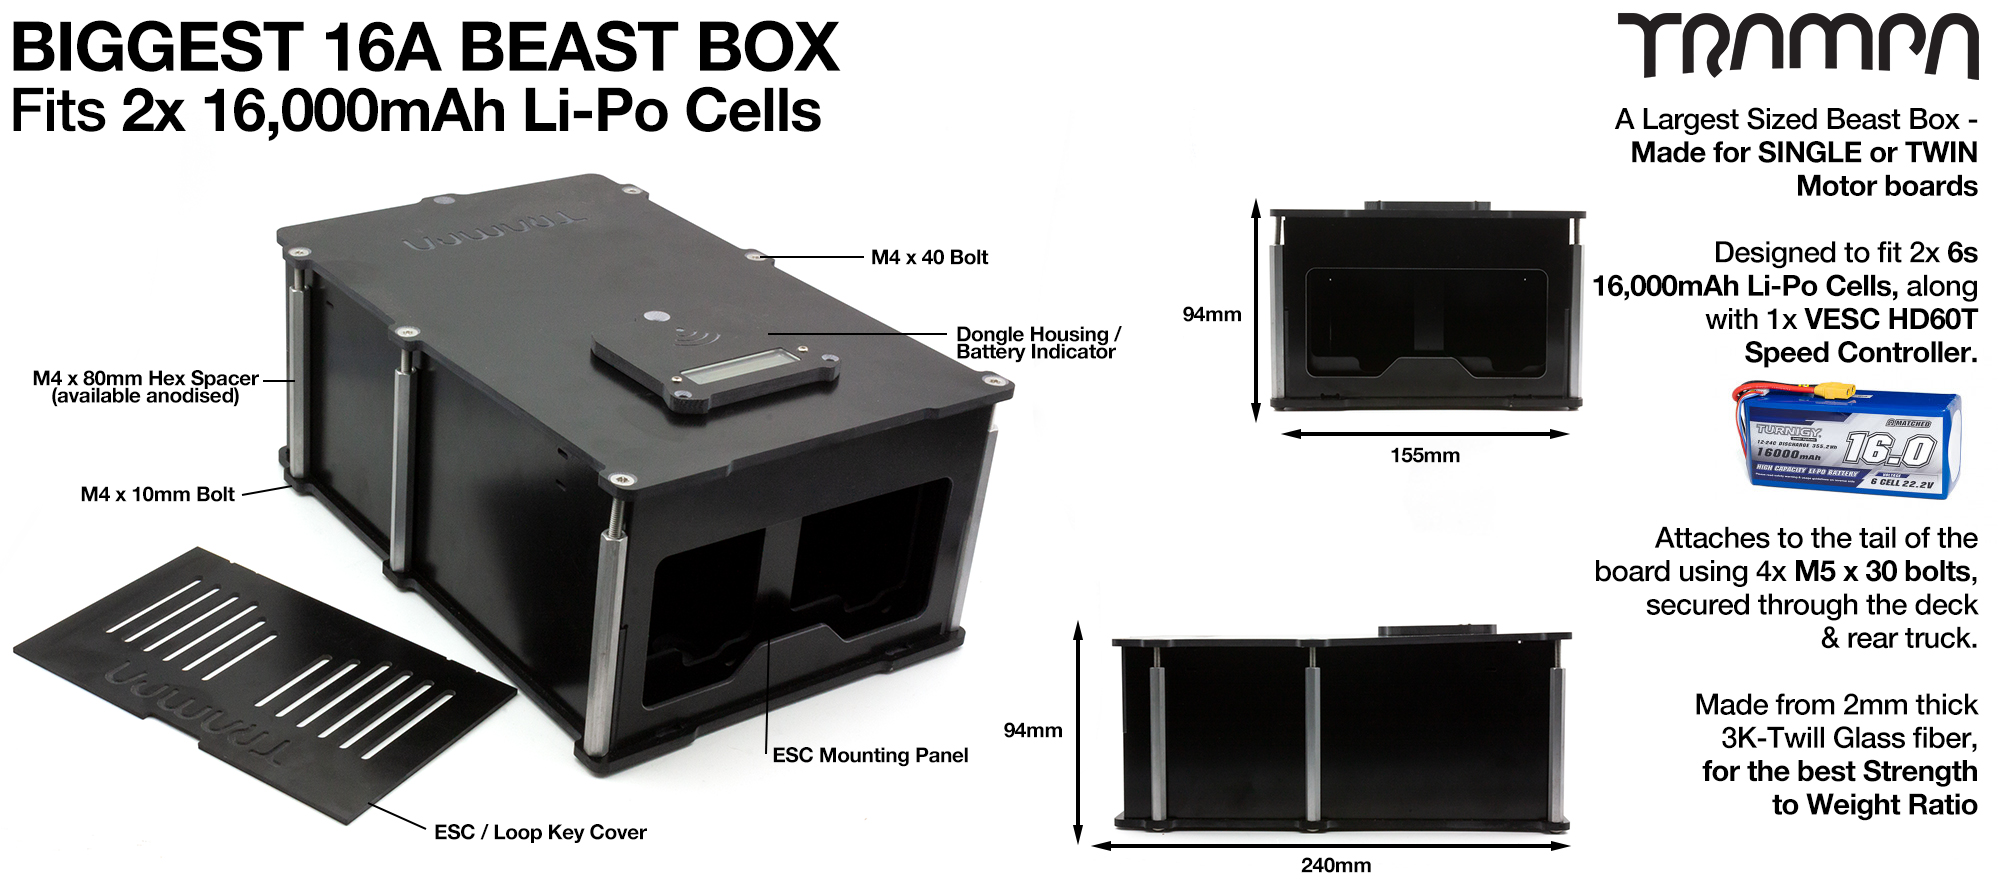 16A BIGGEST BEAST Box fits 2x 6s 16A Li-Po cells & either 1x VESC HD-60T or 1 or 2  VESC 6